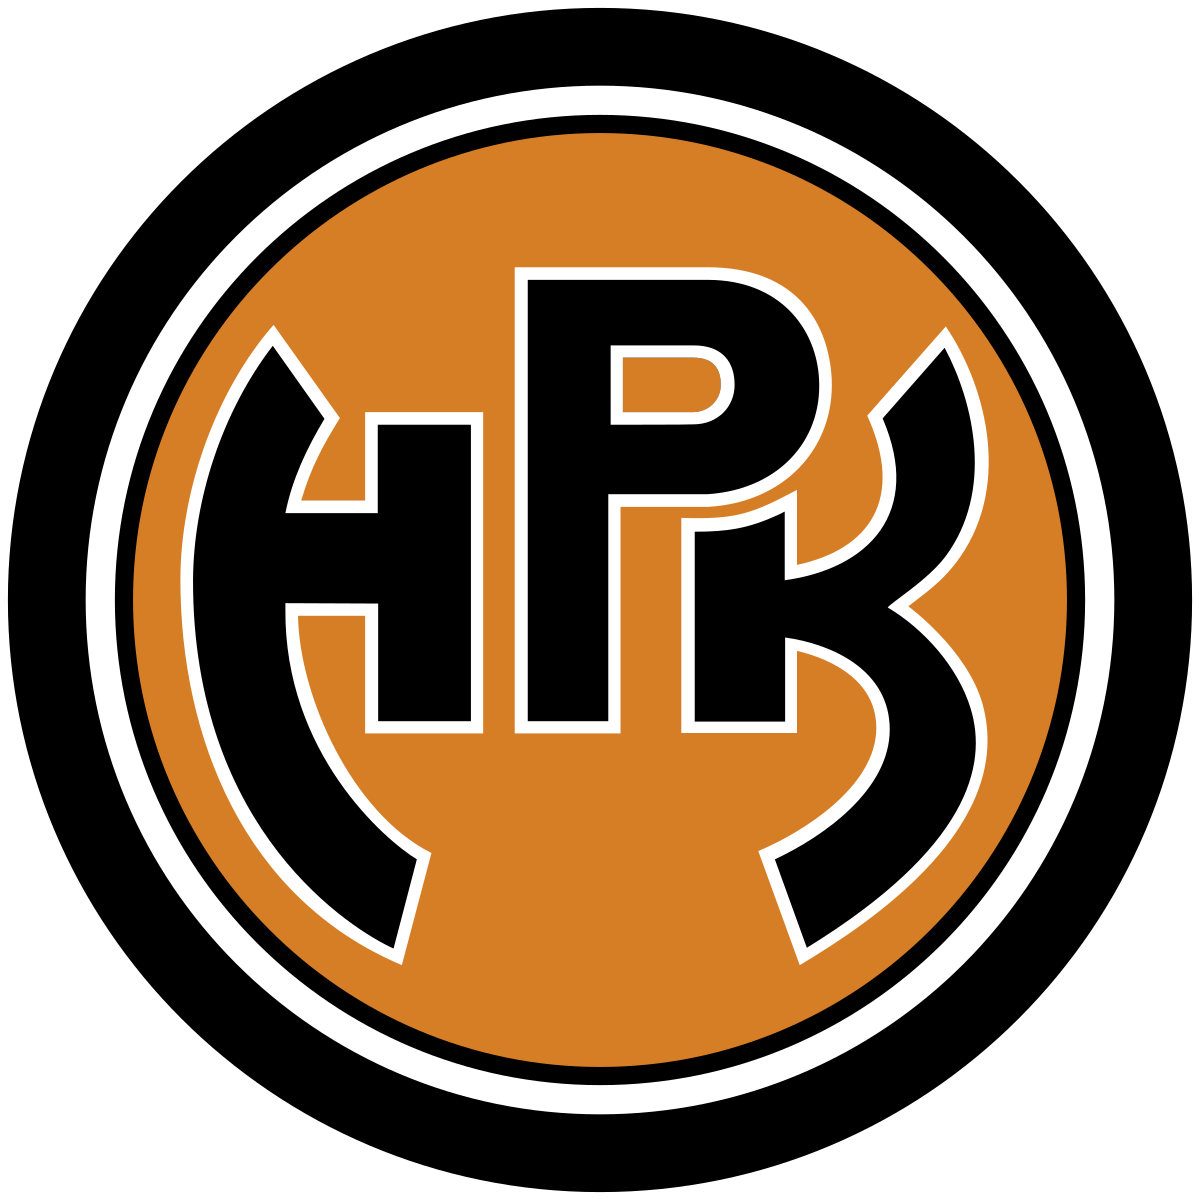 Logo courtesy of HPK Hameenlinna